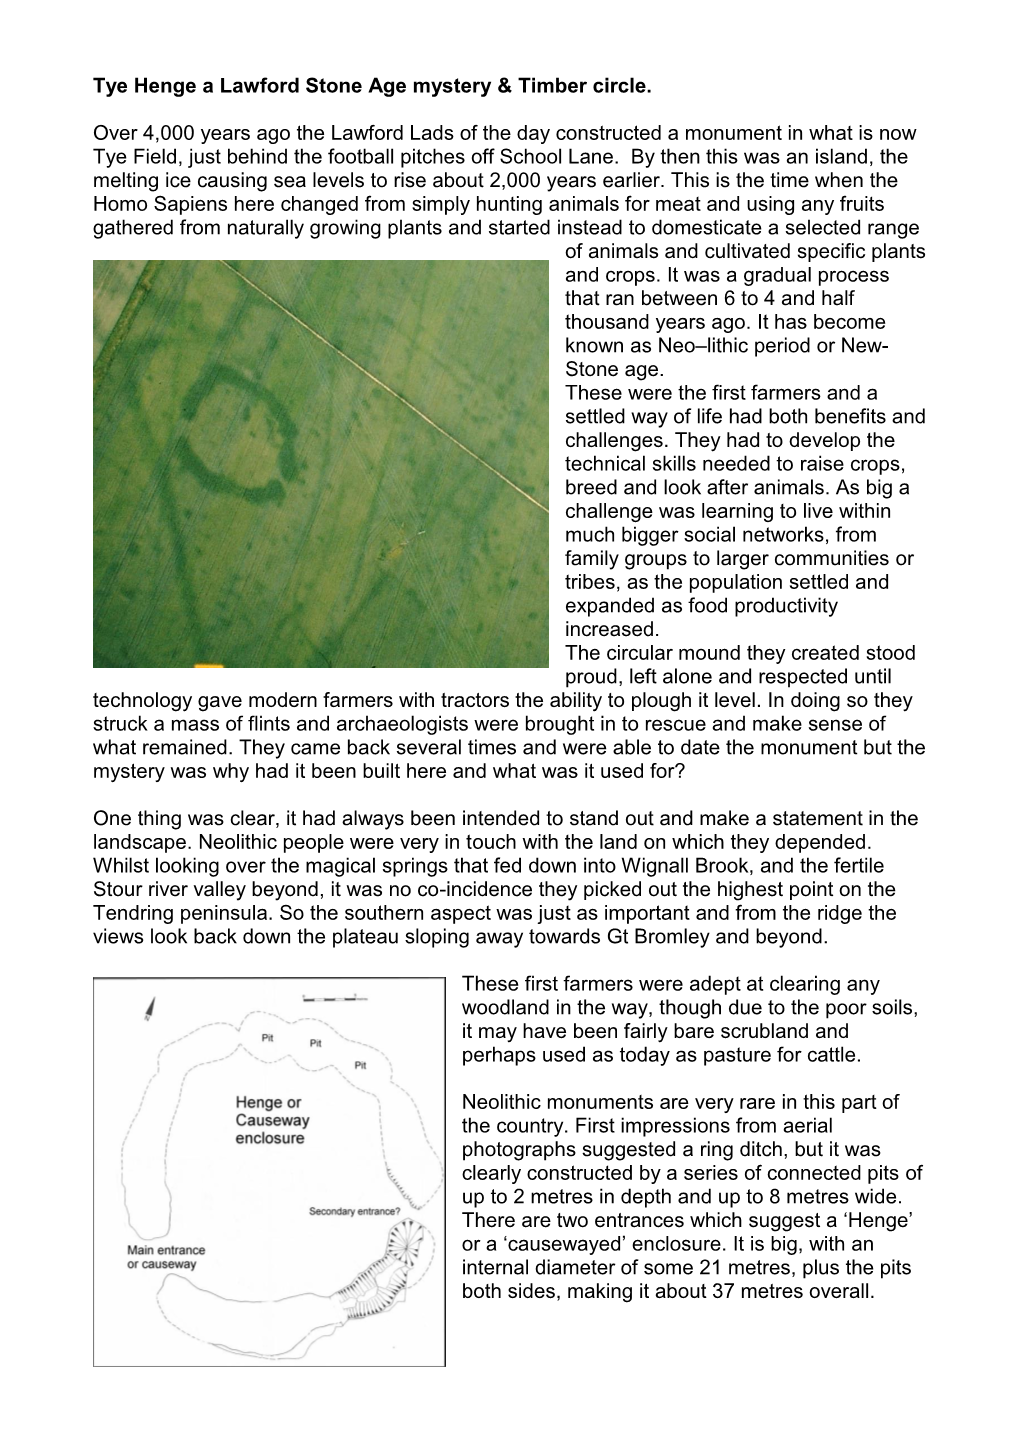 Tye Henge a Lawford Stone Age Mystery & Timber Circle